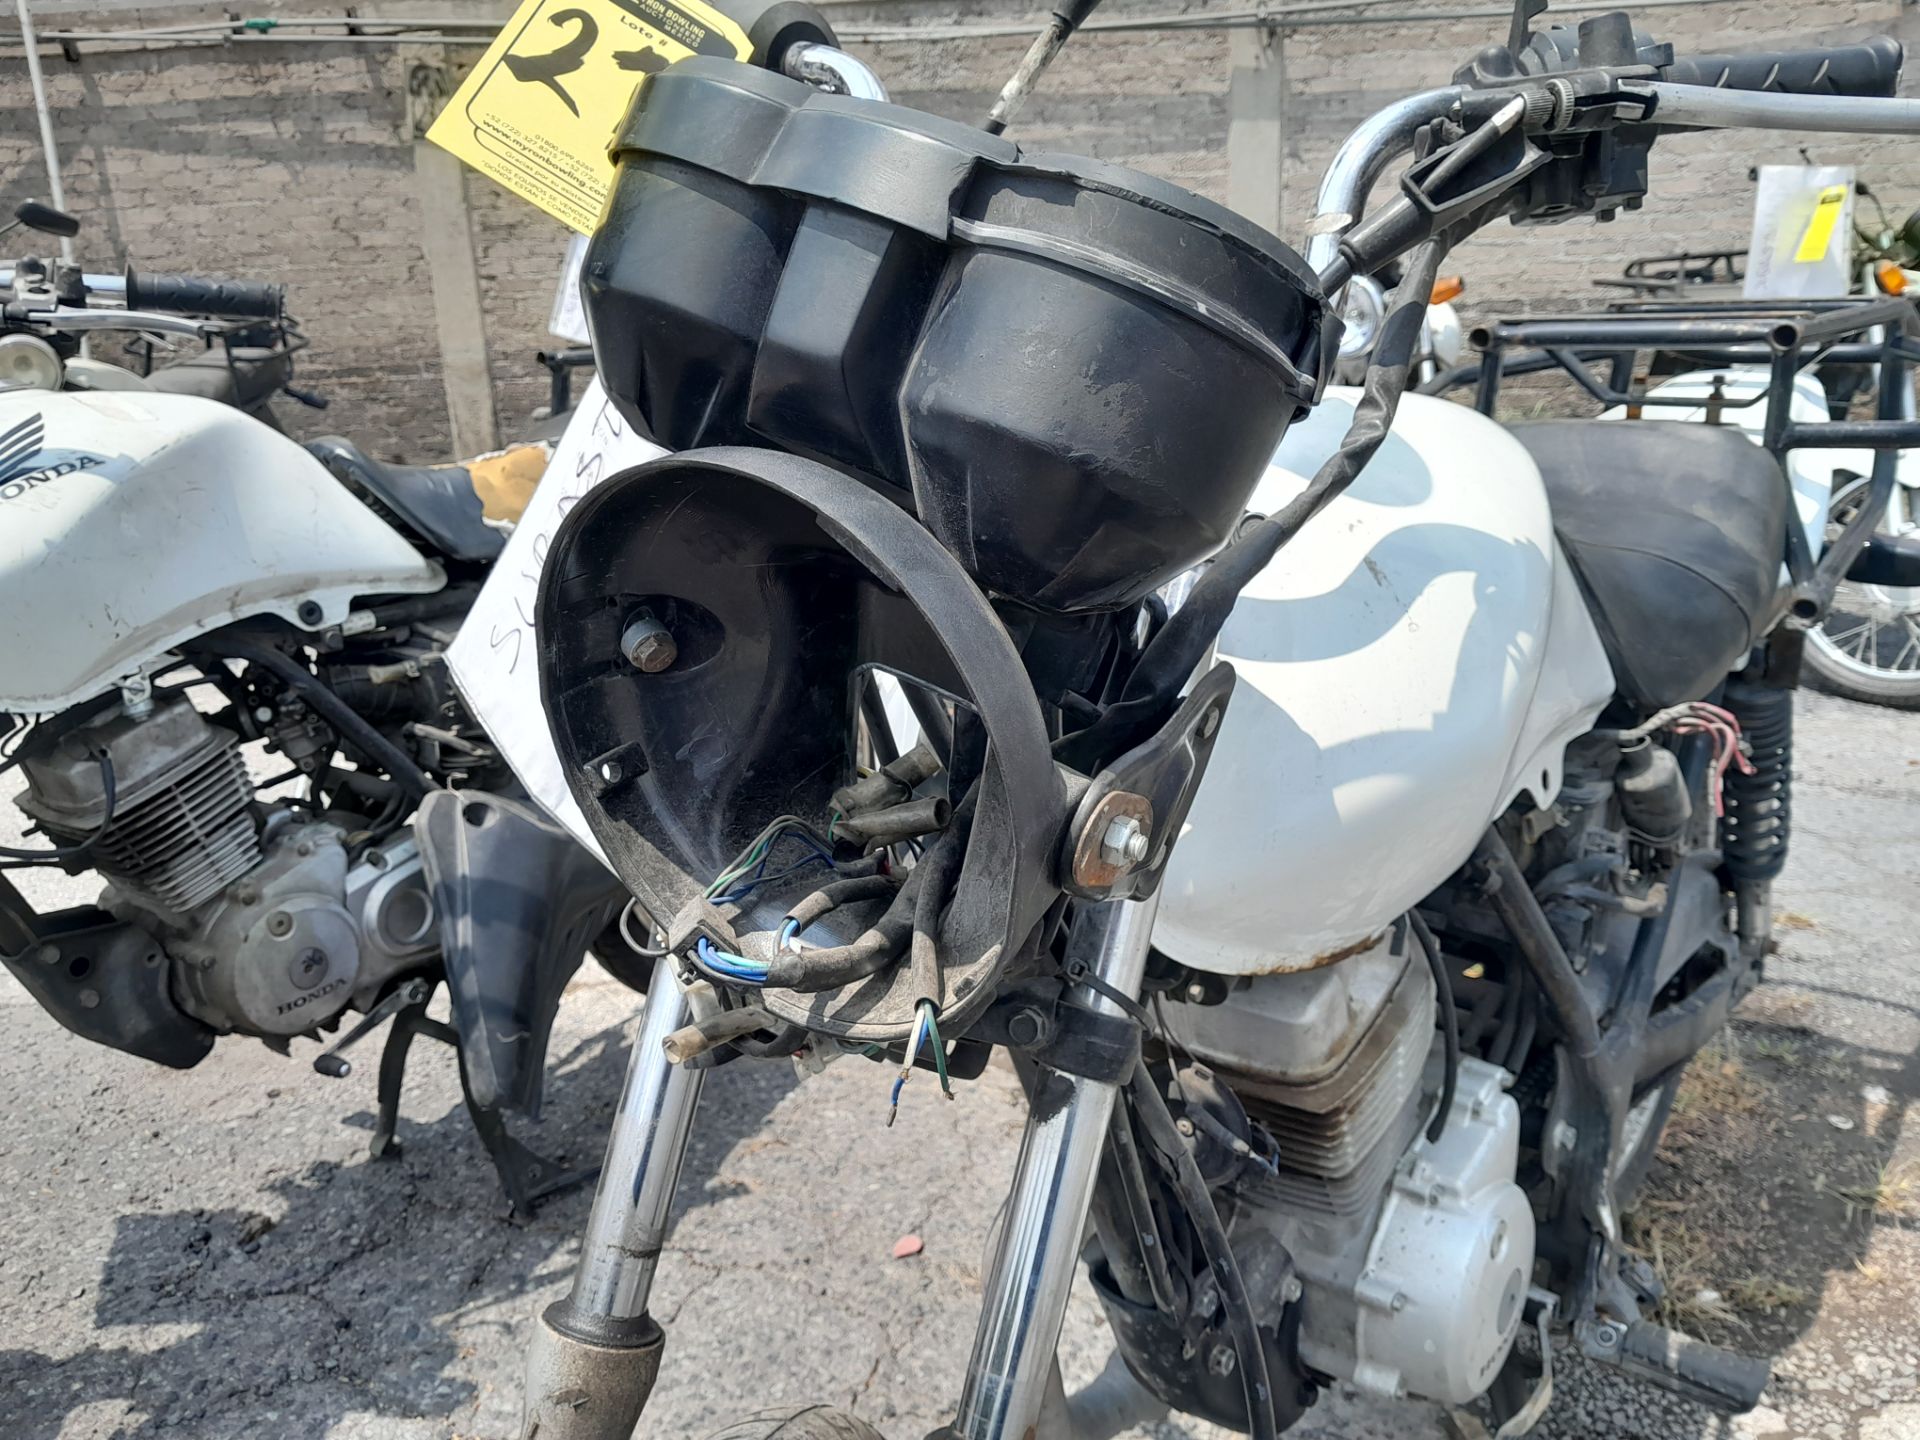 Lote de 2 Motocicletas contiene: 1 Motocicleta de trabajo usada Marca Honda Cargo 150, Modelo 2017, - Image 4 of 11